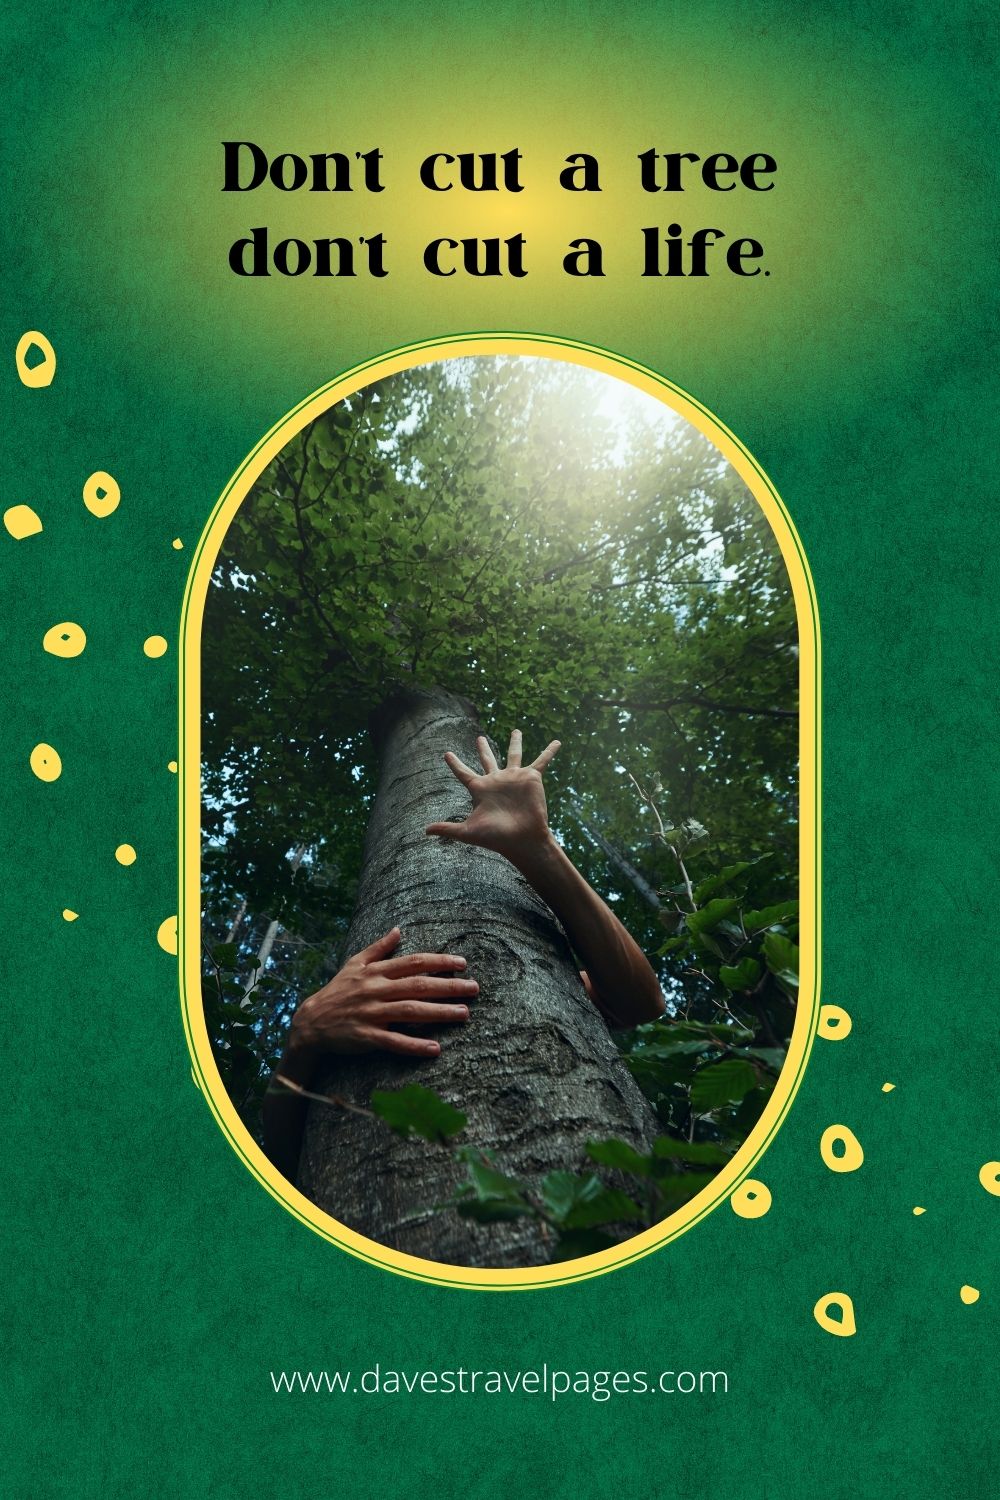 Don't cut a tree don't cut a life.